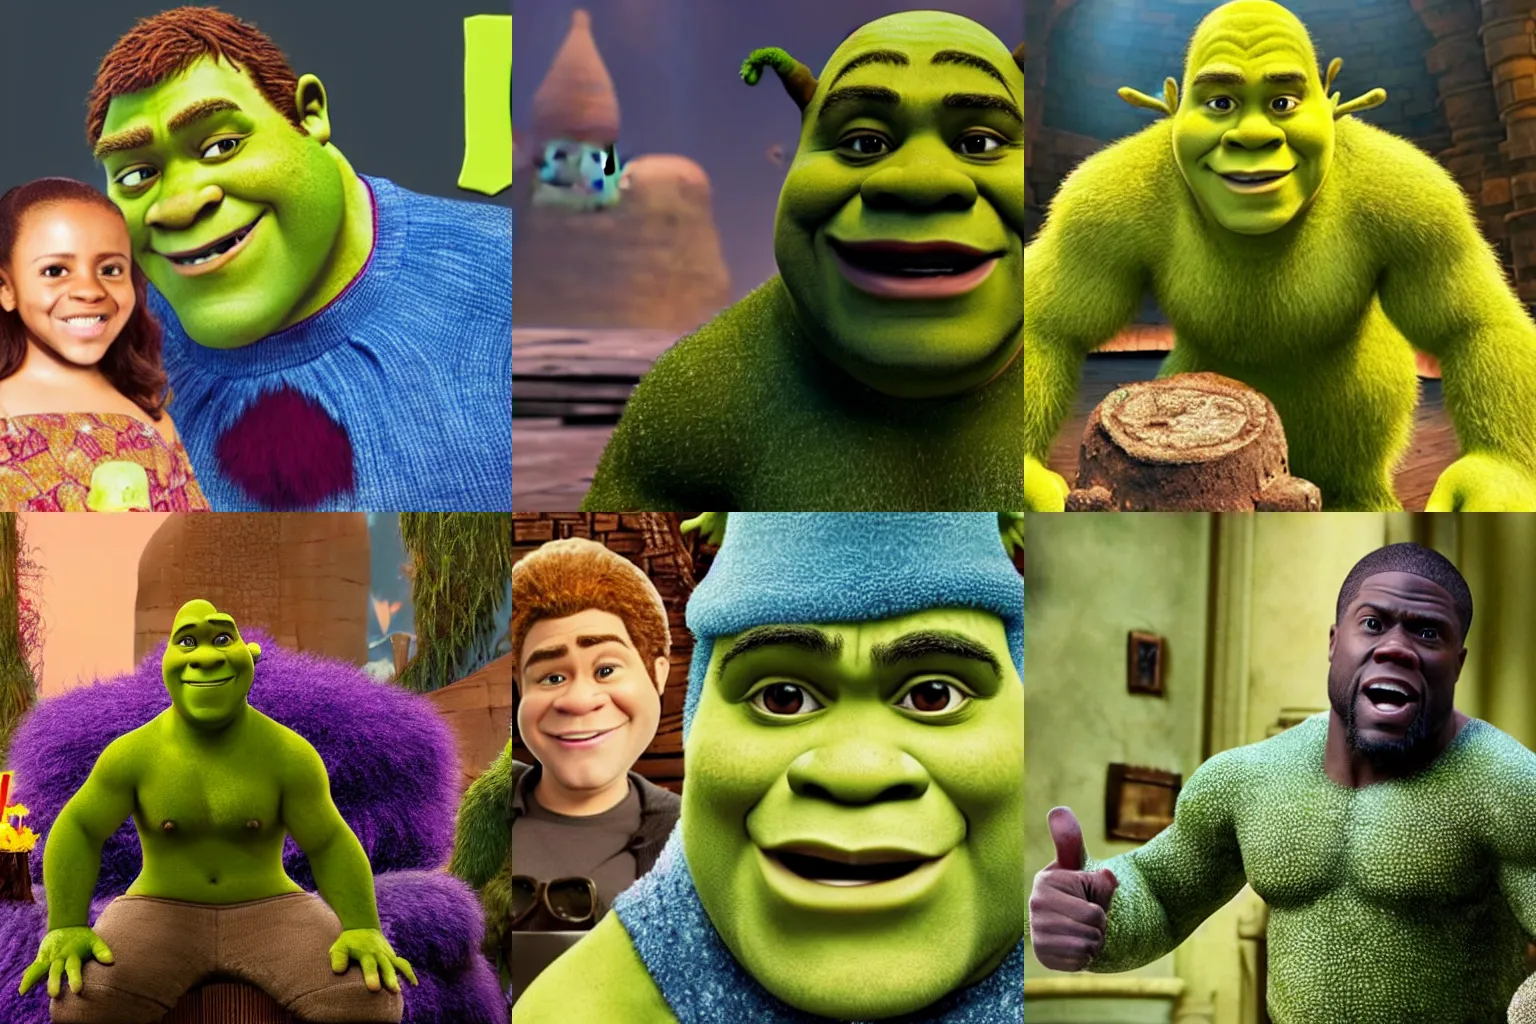 Prompt: Kevin Hart as Shrek